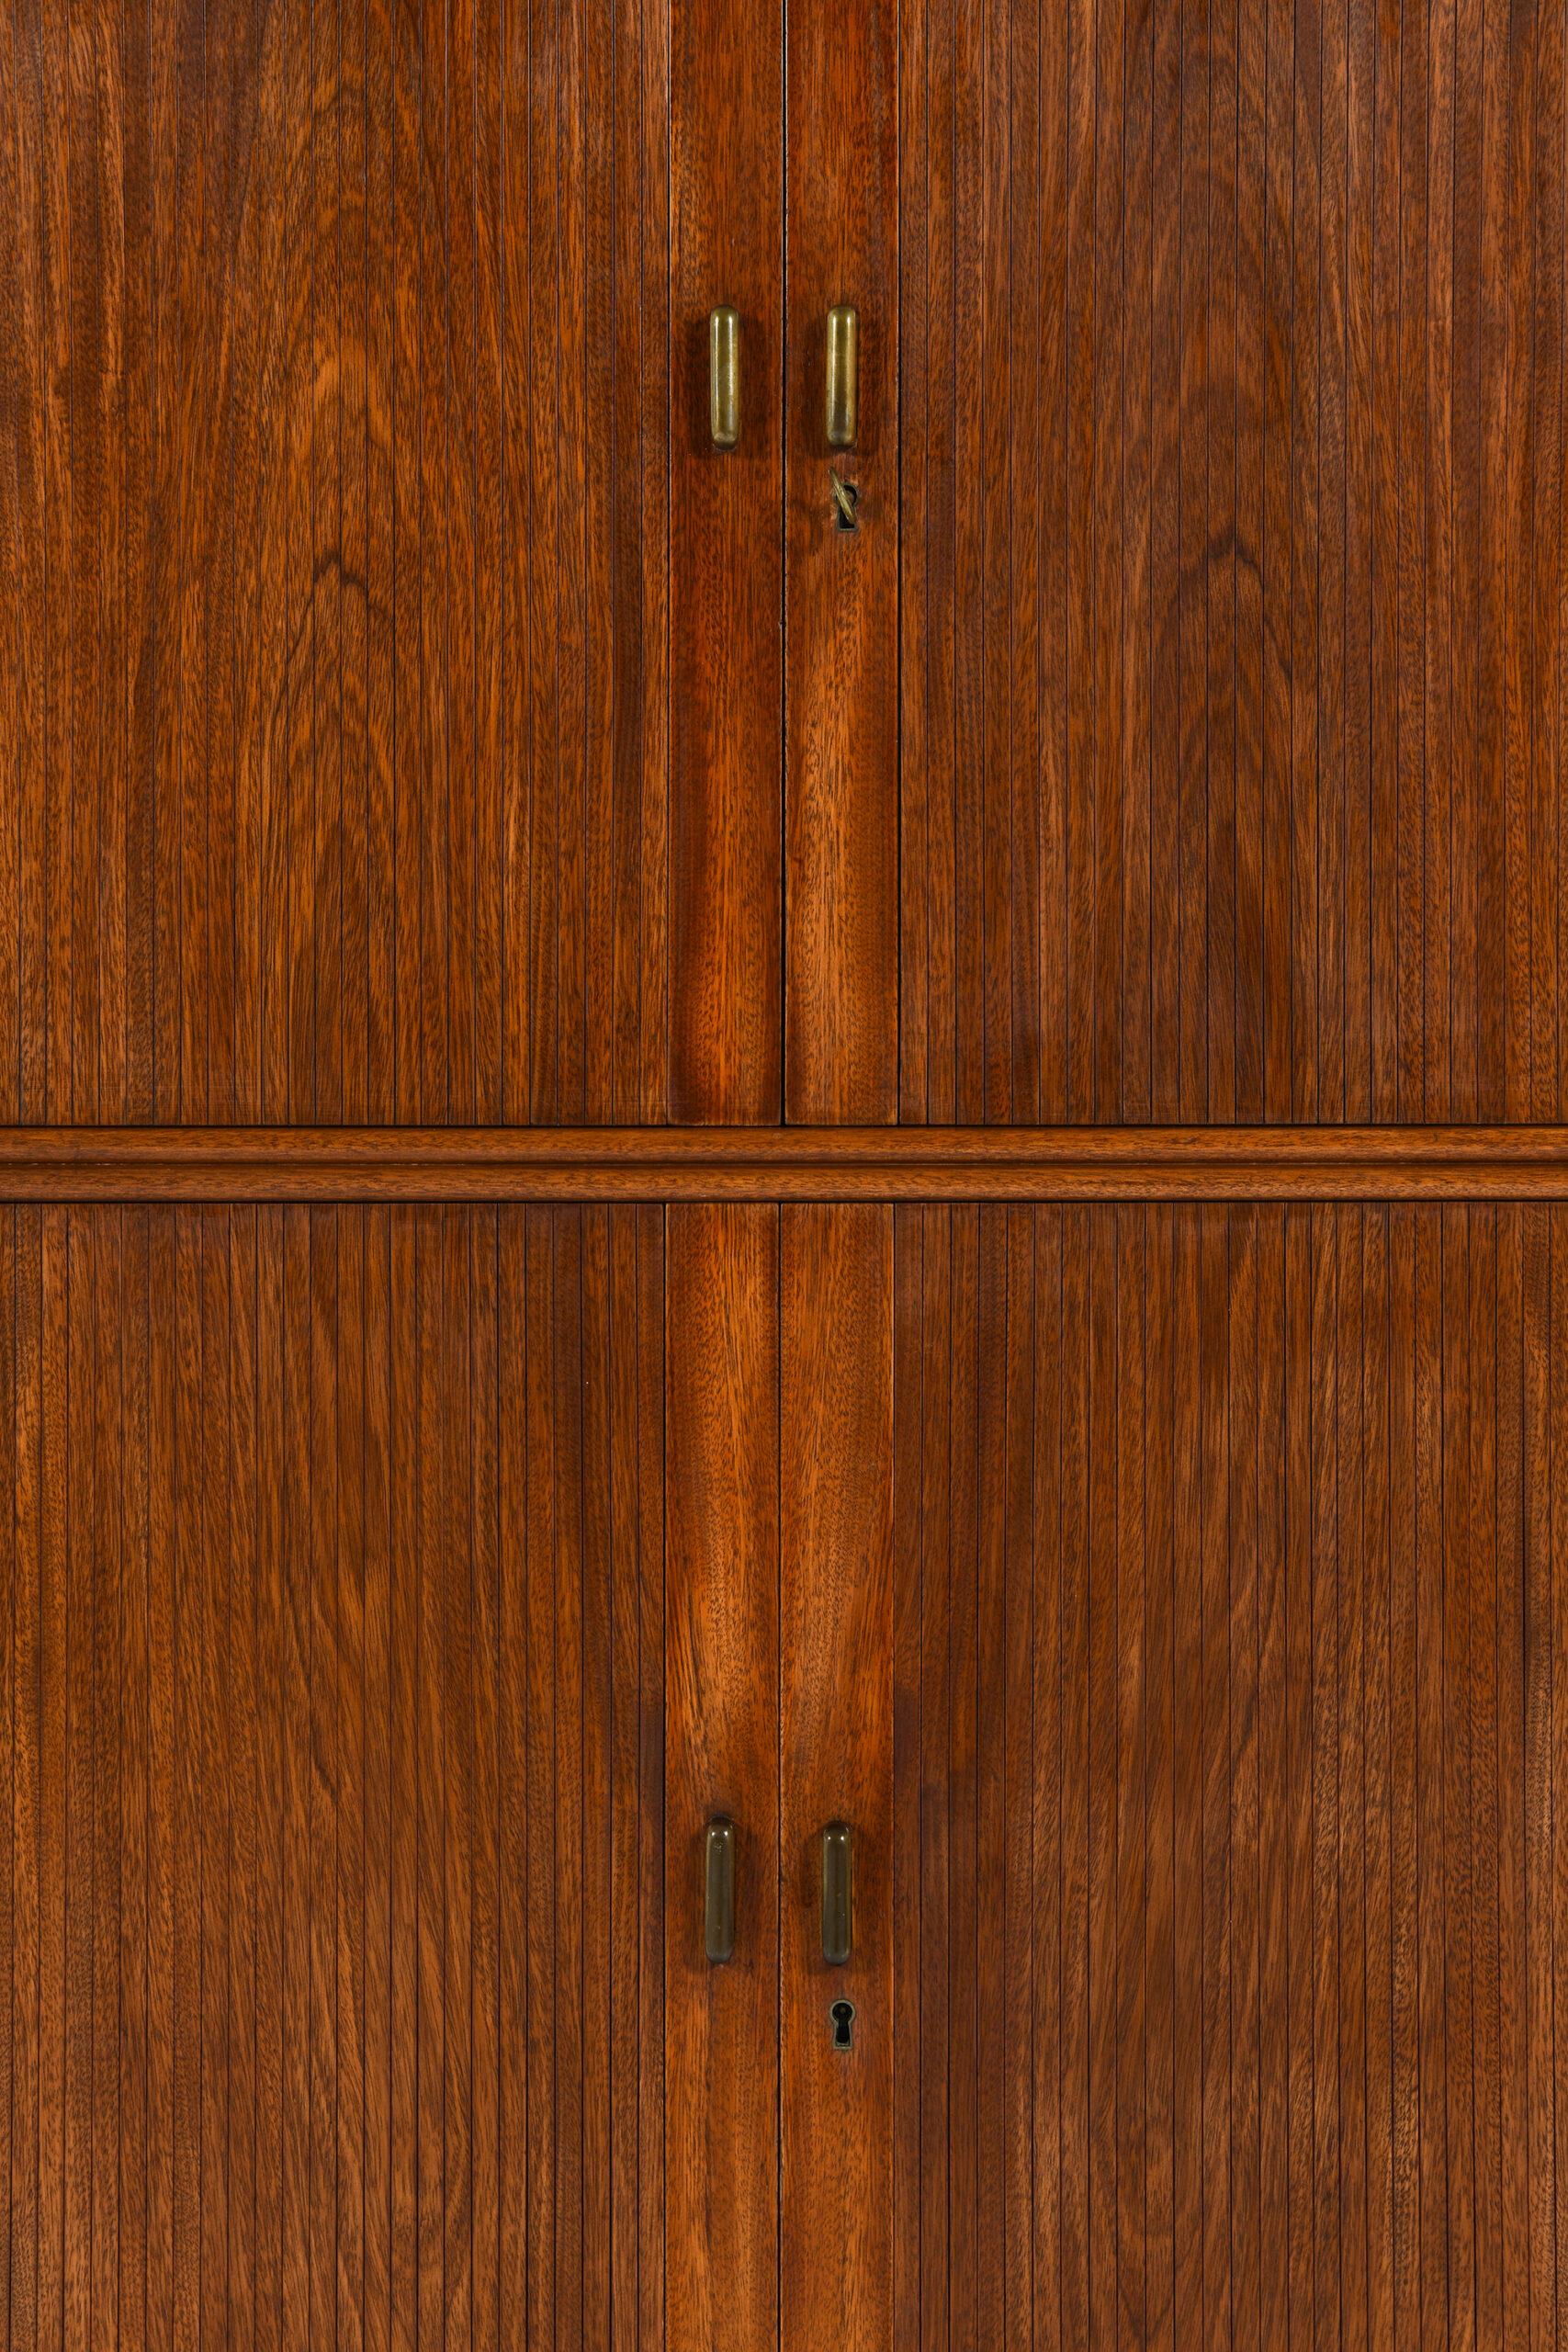 Scandinavian Modern Cabinet with Tambour Doors Attributed to Jacob Kjær